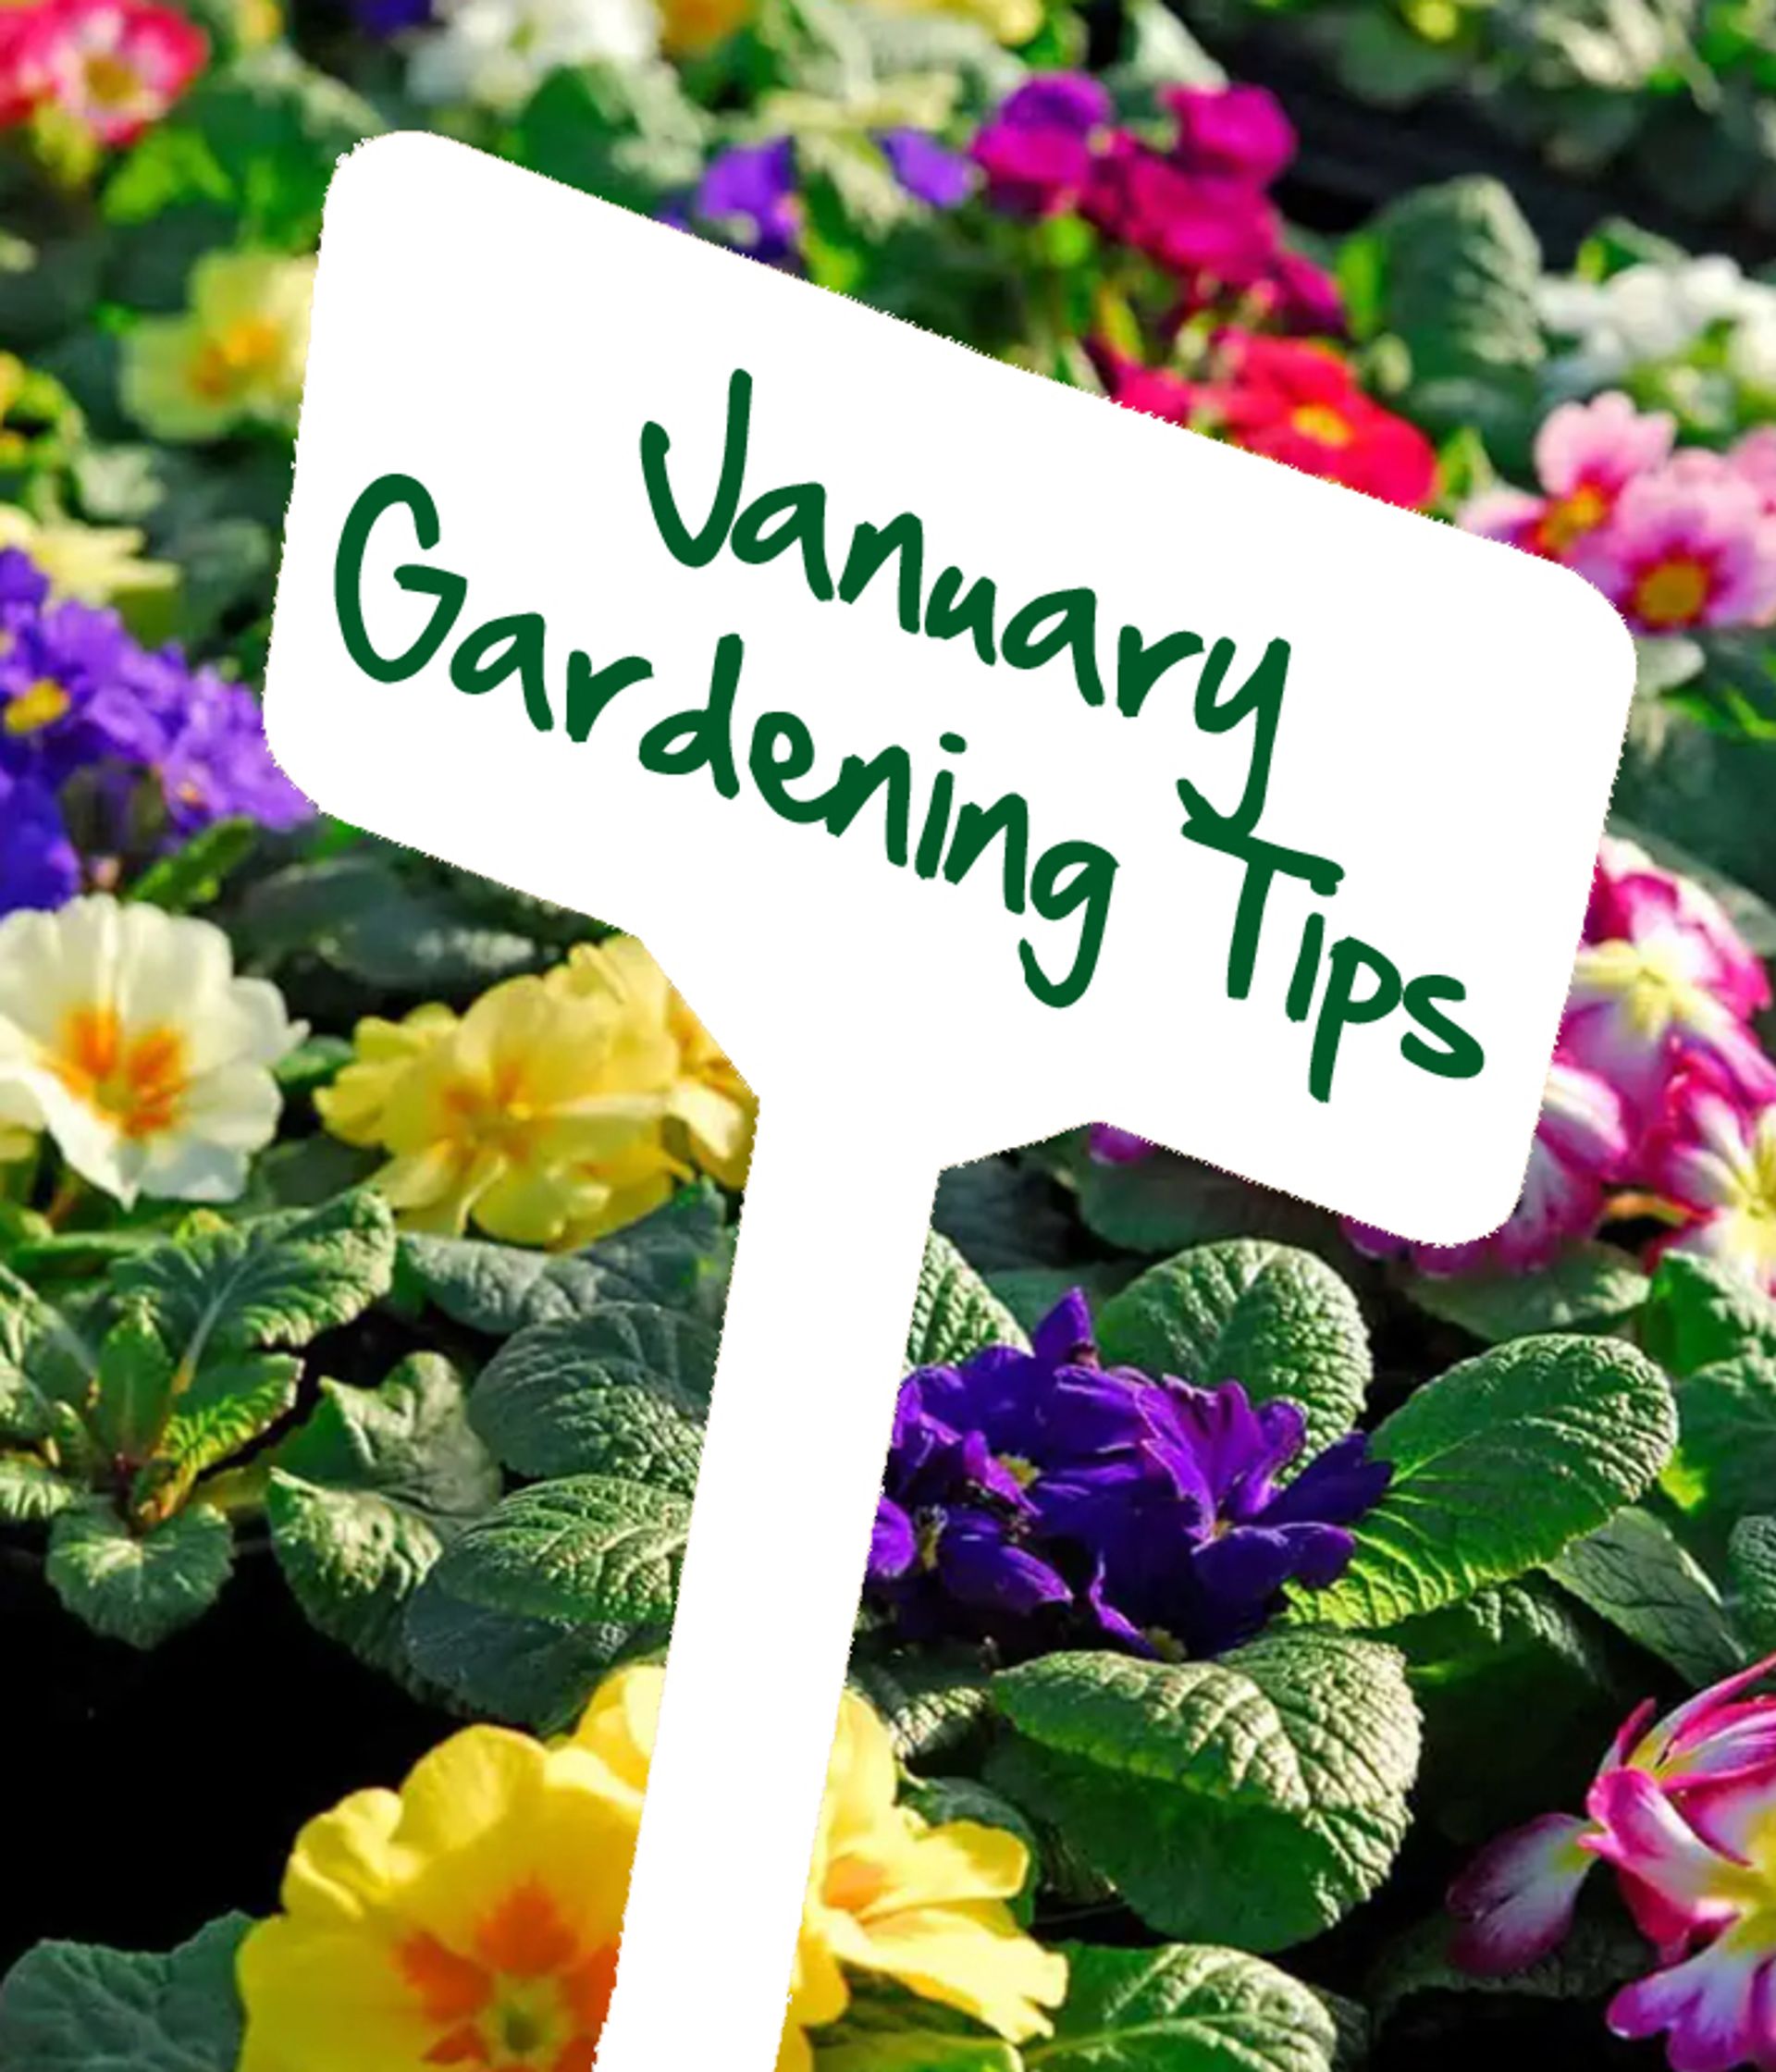 January Gardening Tips by Reg Moule